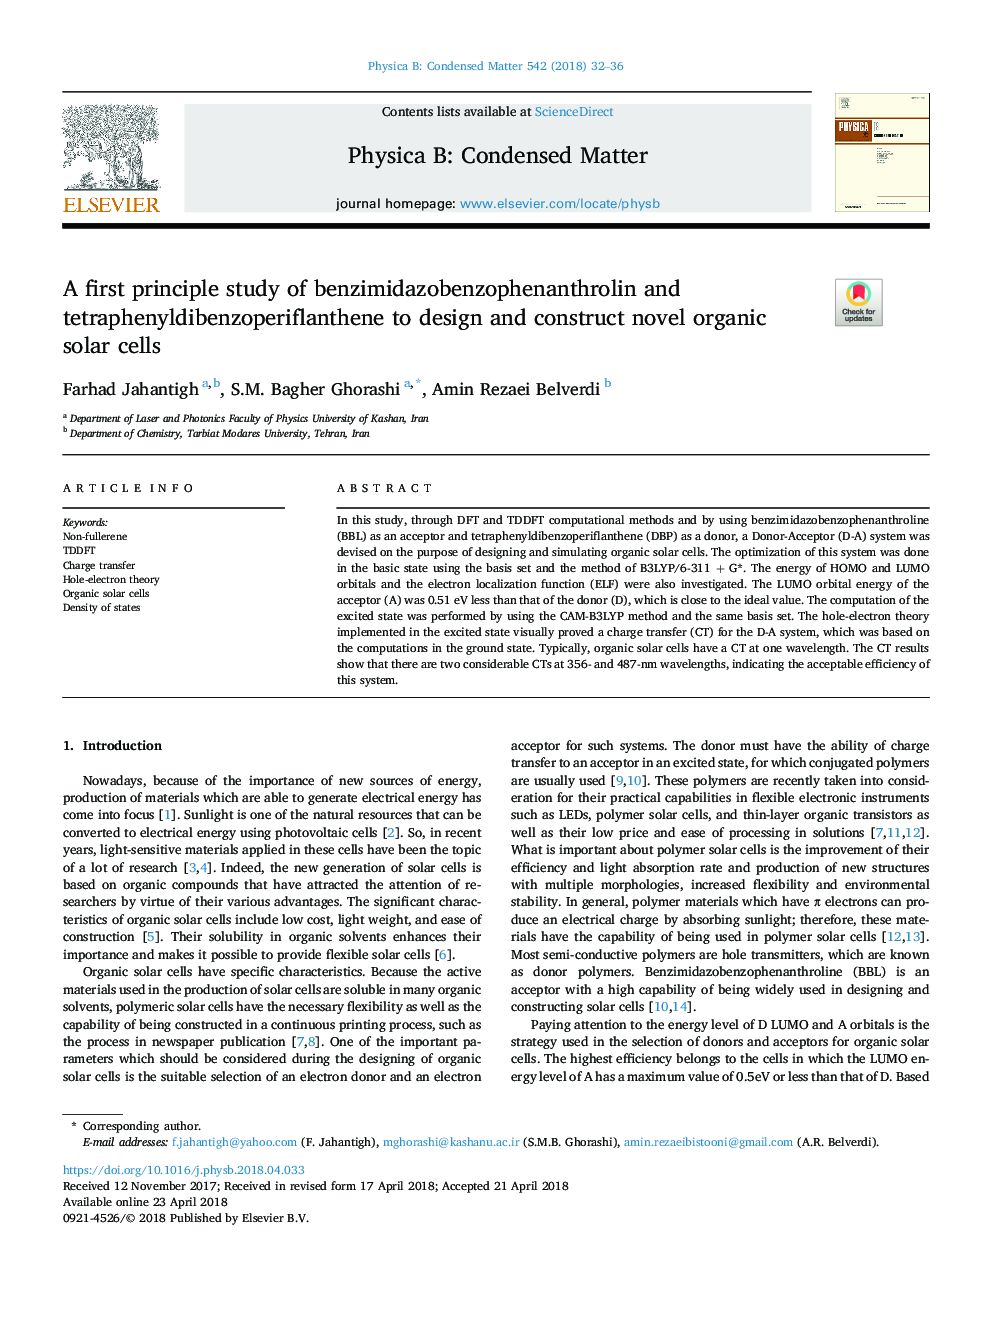 A first principle study of benzimidazobenzophenanthrolin and tetraphenyldibenzoperiflanthene to design and construct novel organic solar cells